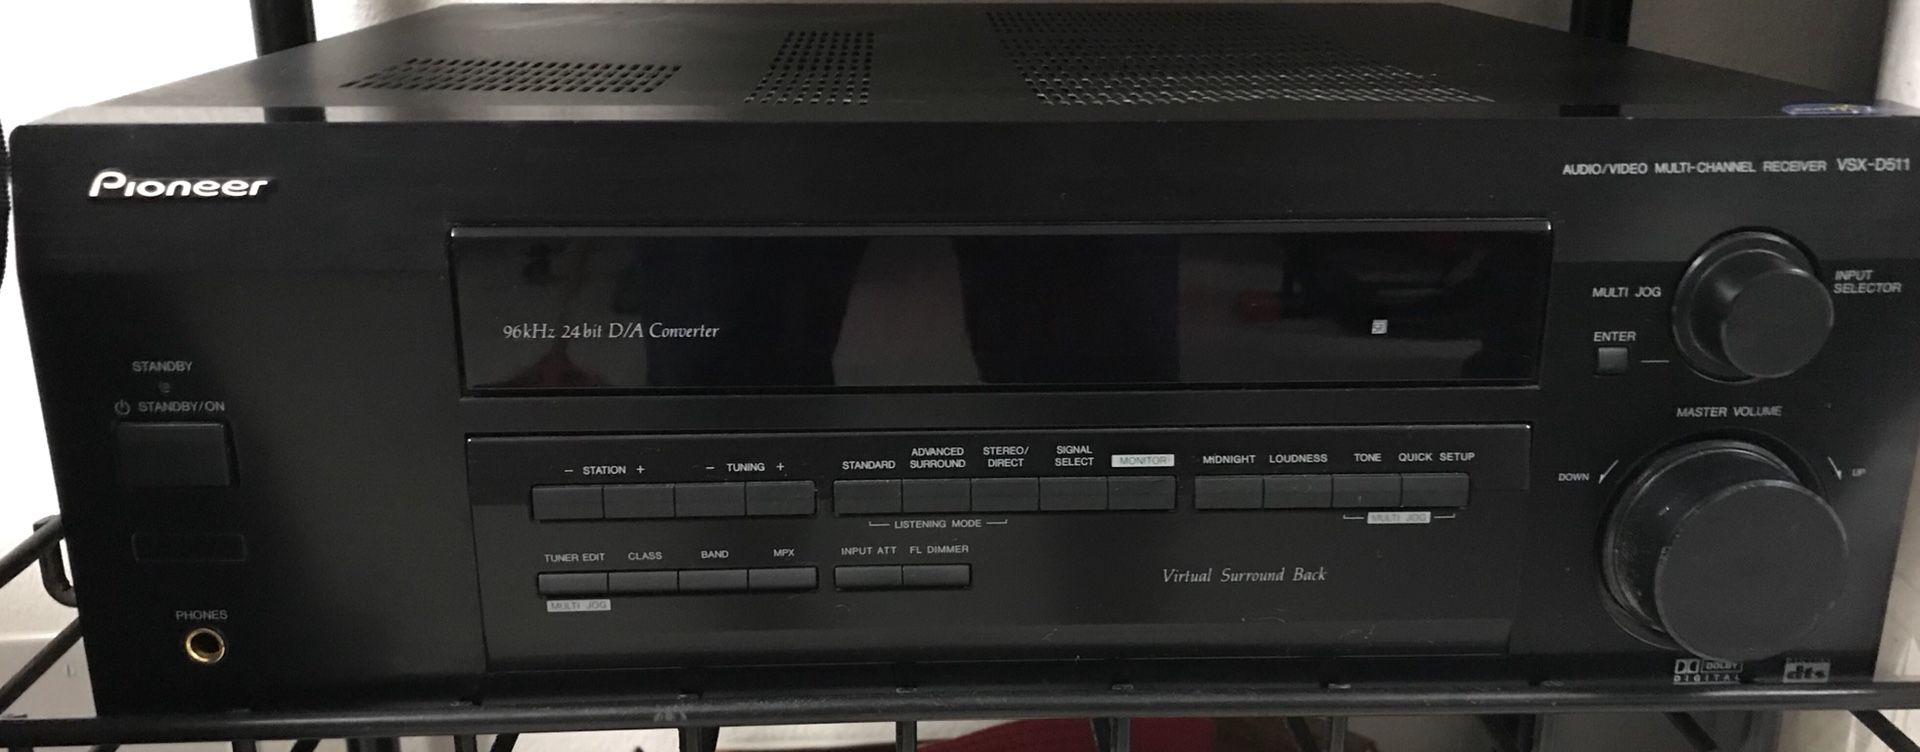 PIONEER VSX-D511 DIGITAL AUDIO/VIDEO RECEIVER A/V RECEIVERS